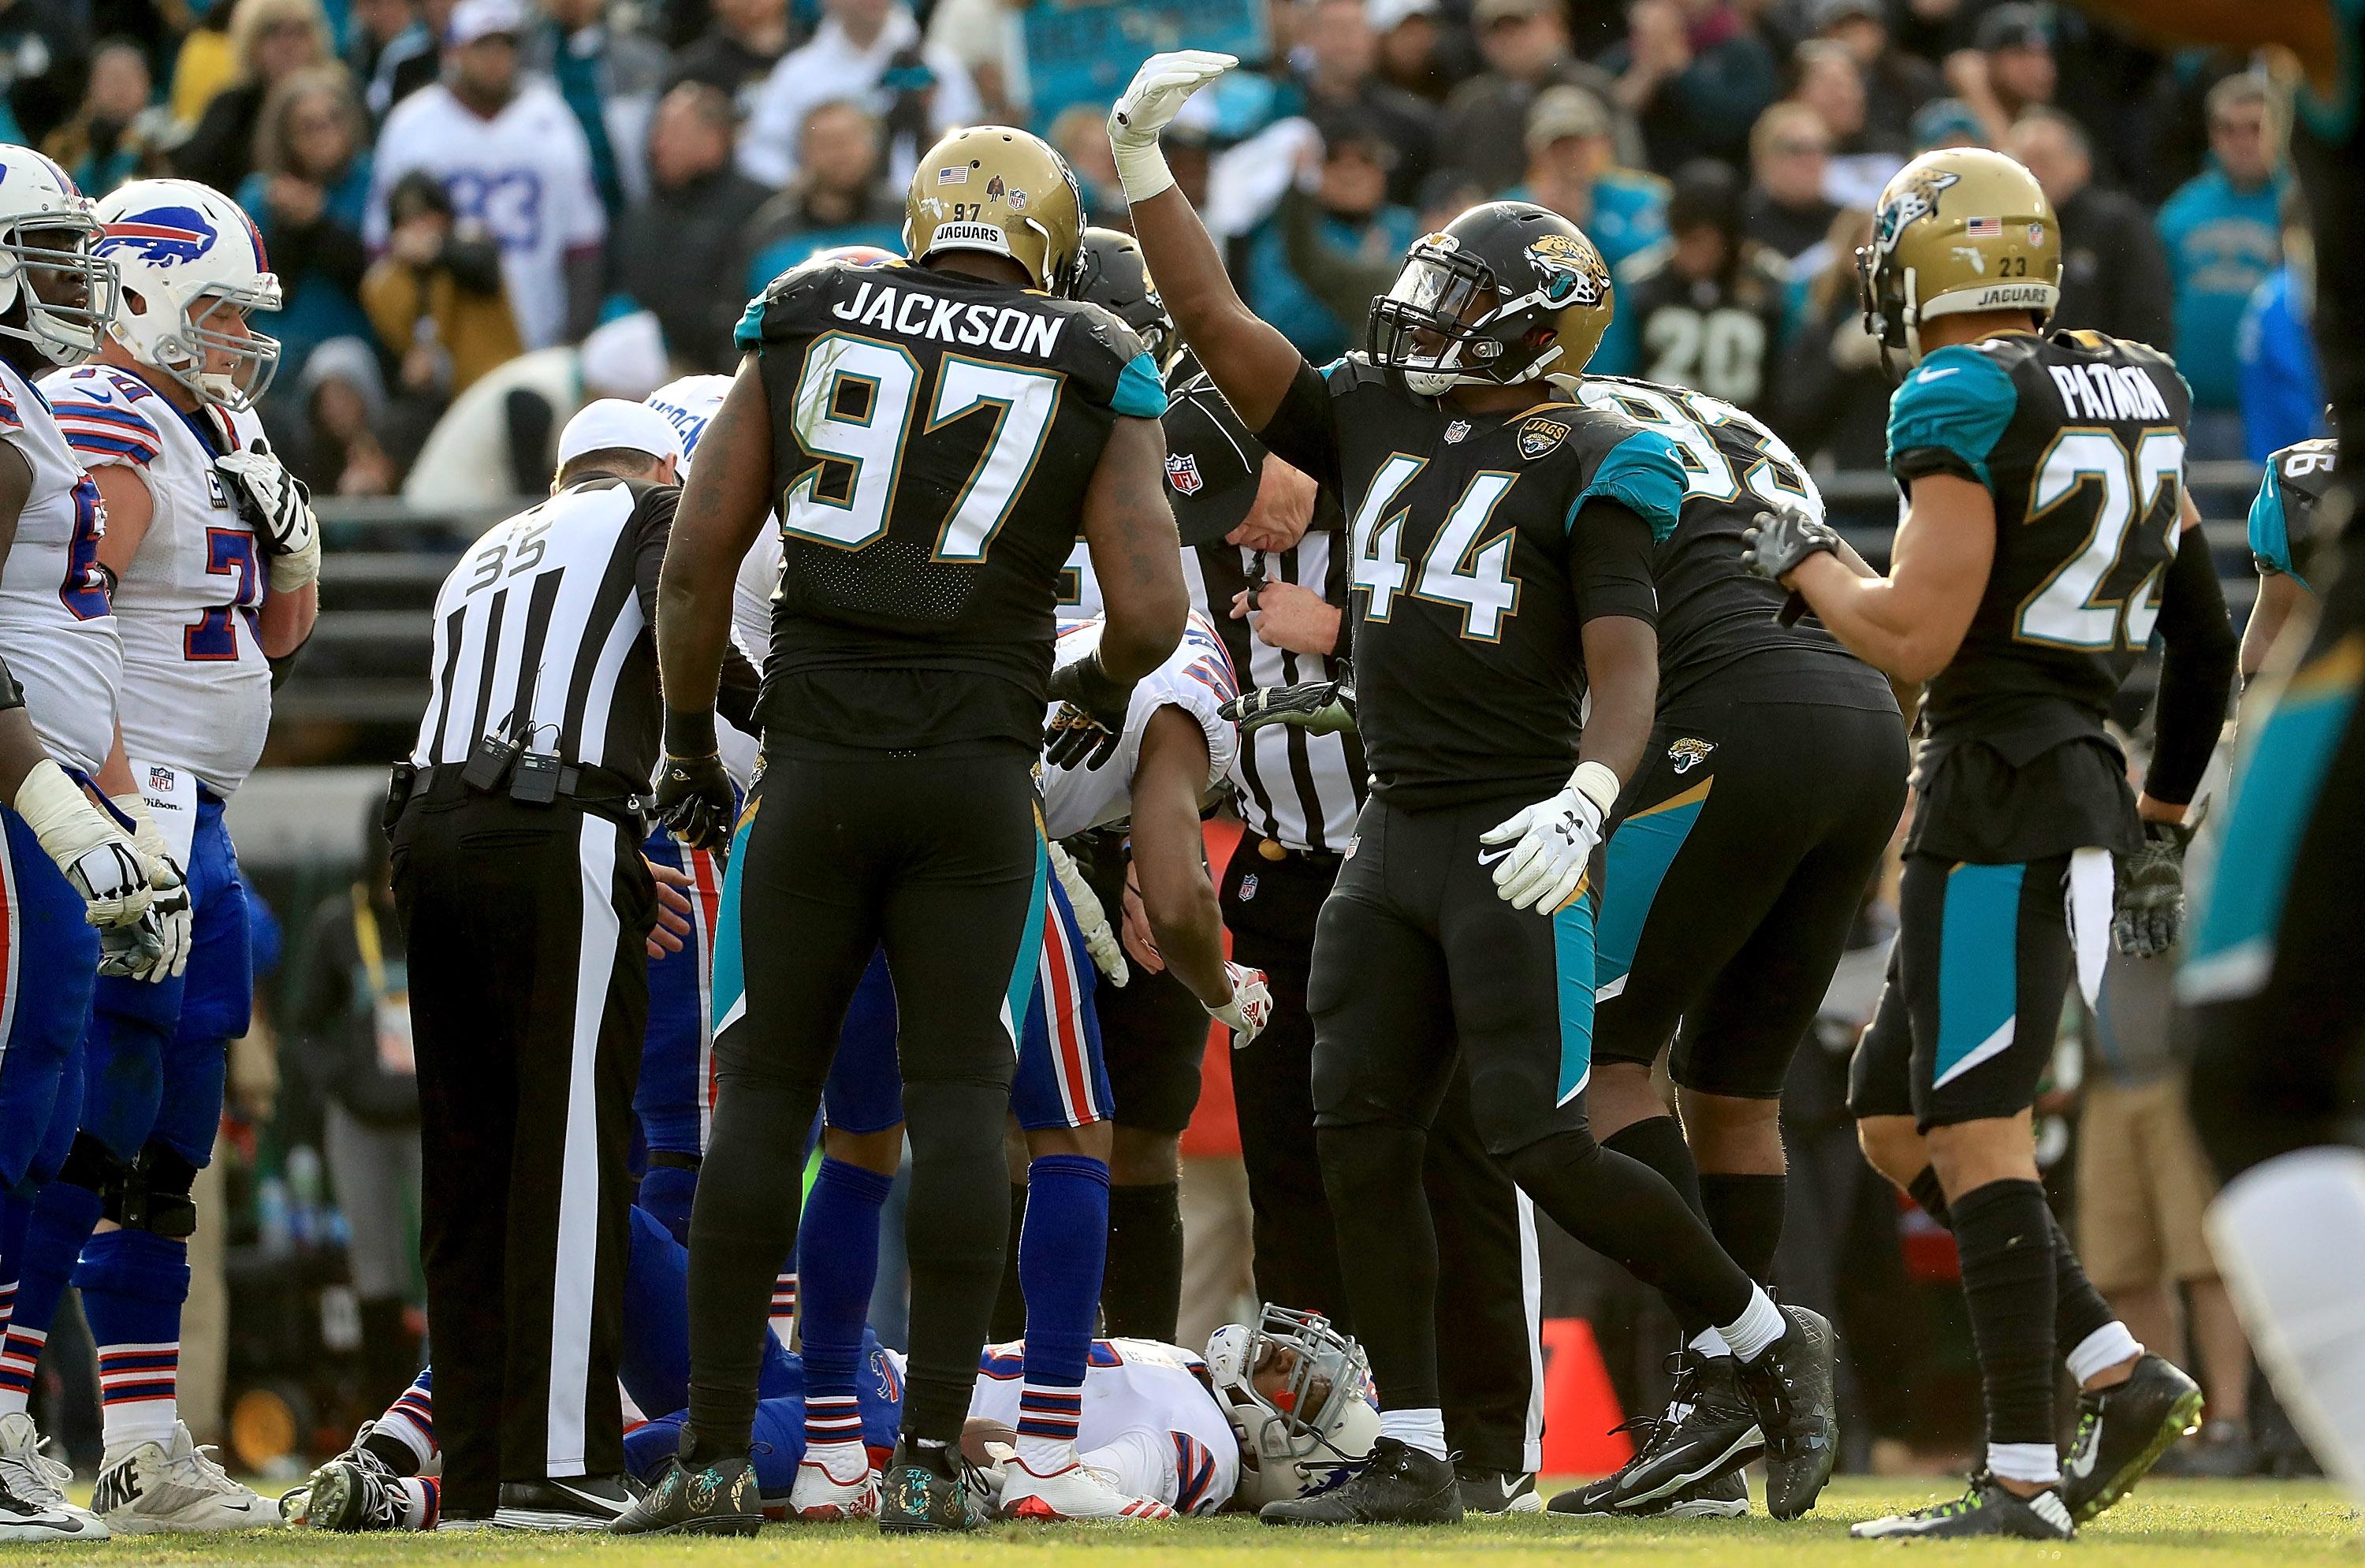 New Orleans Saints and Jacksonville Jaguars advance to NFL's divisional